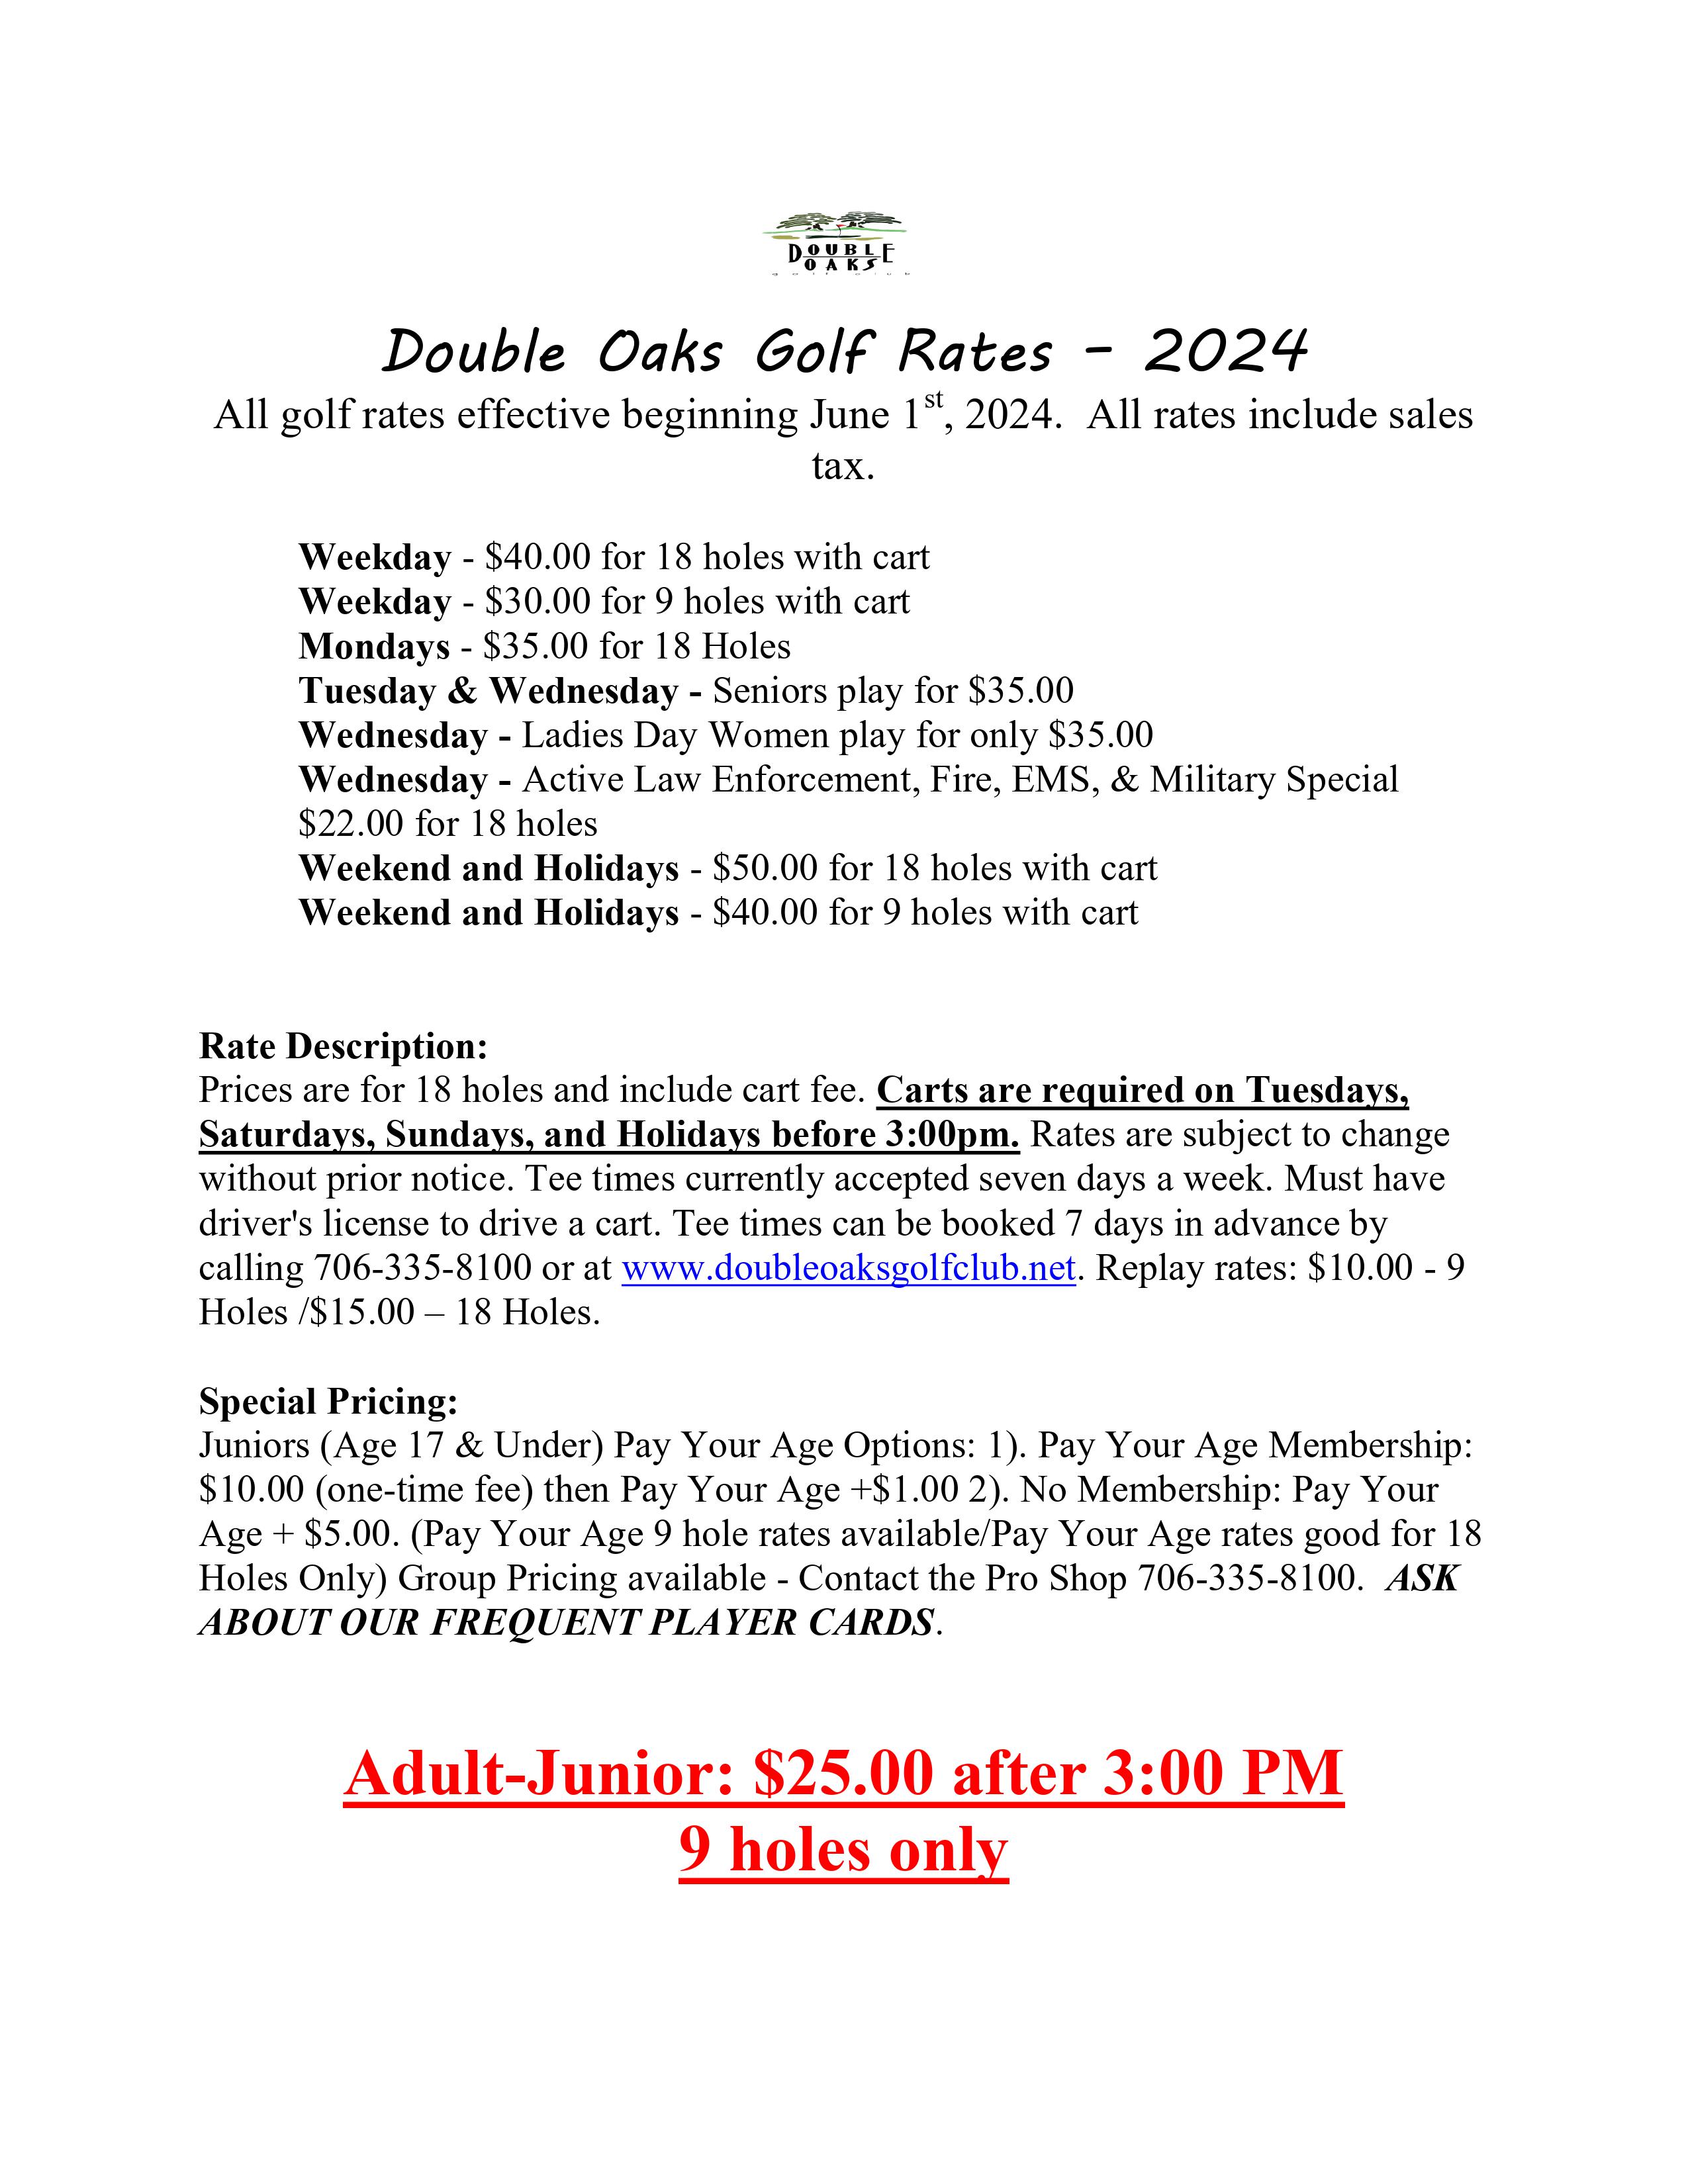 2023 Double Oaks Golf Club Rates